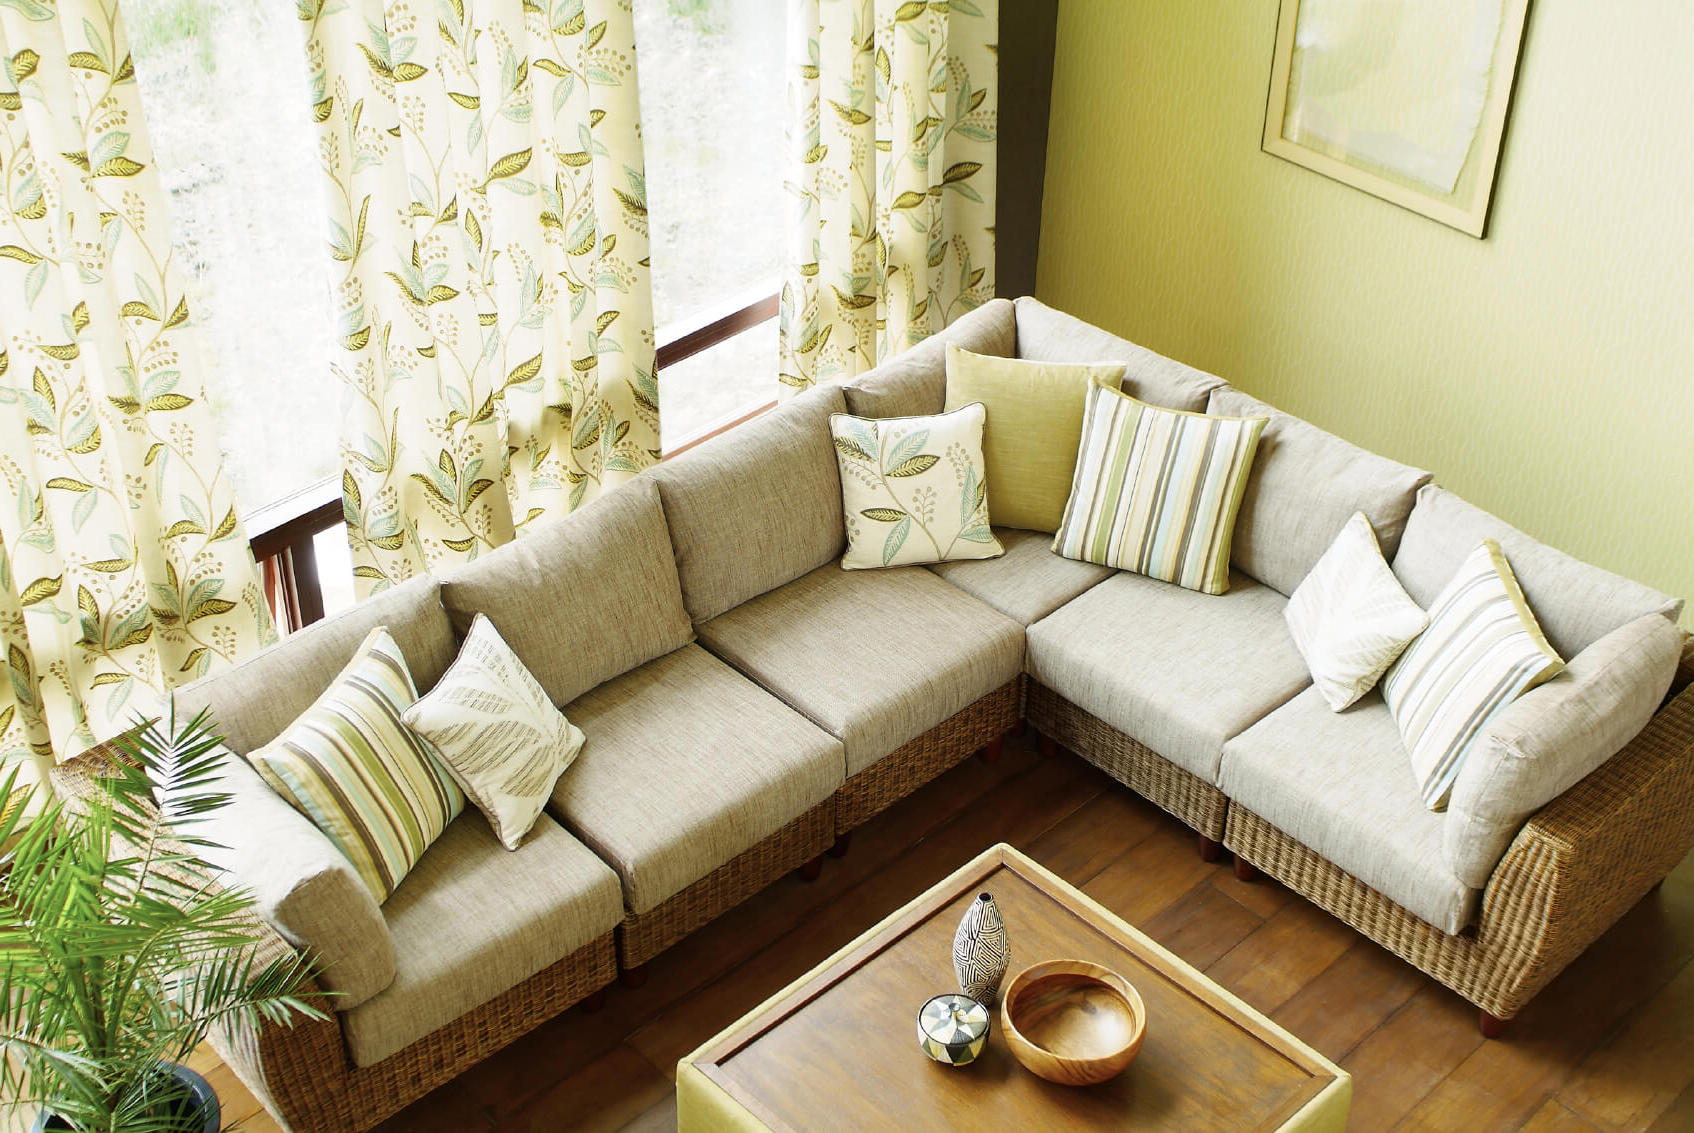 Best Sofa Design For Small Living Room